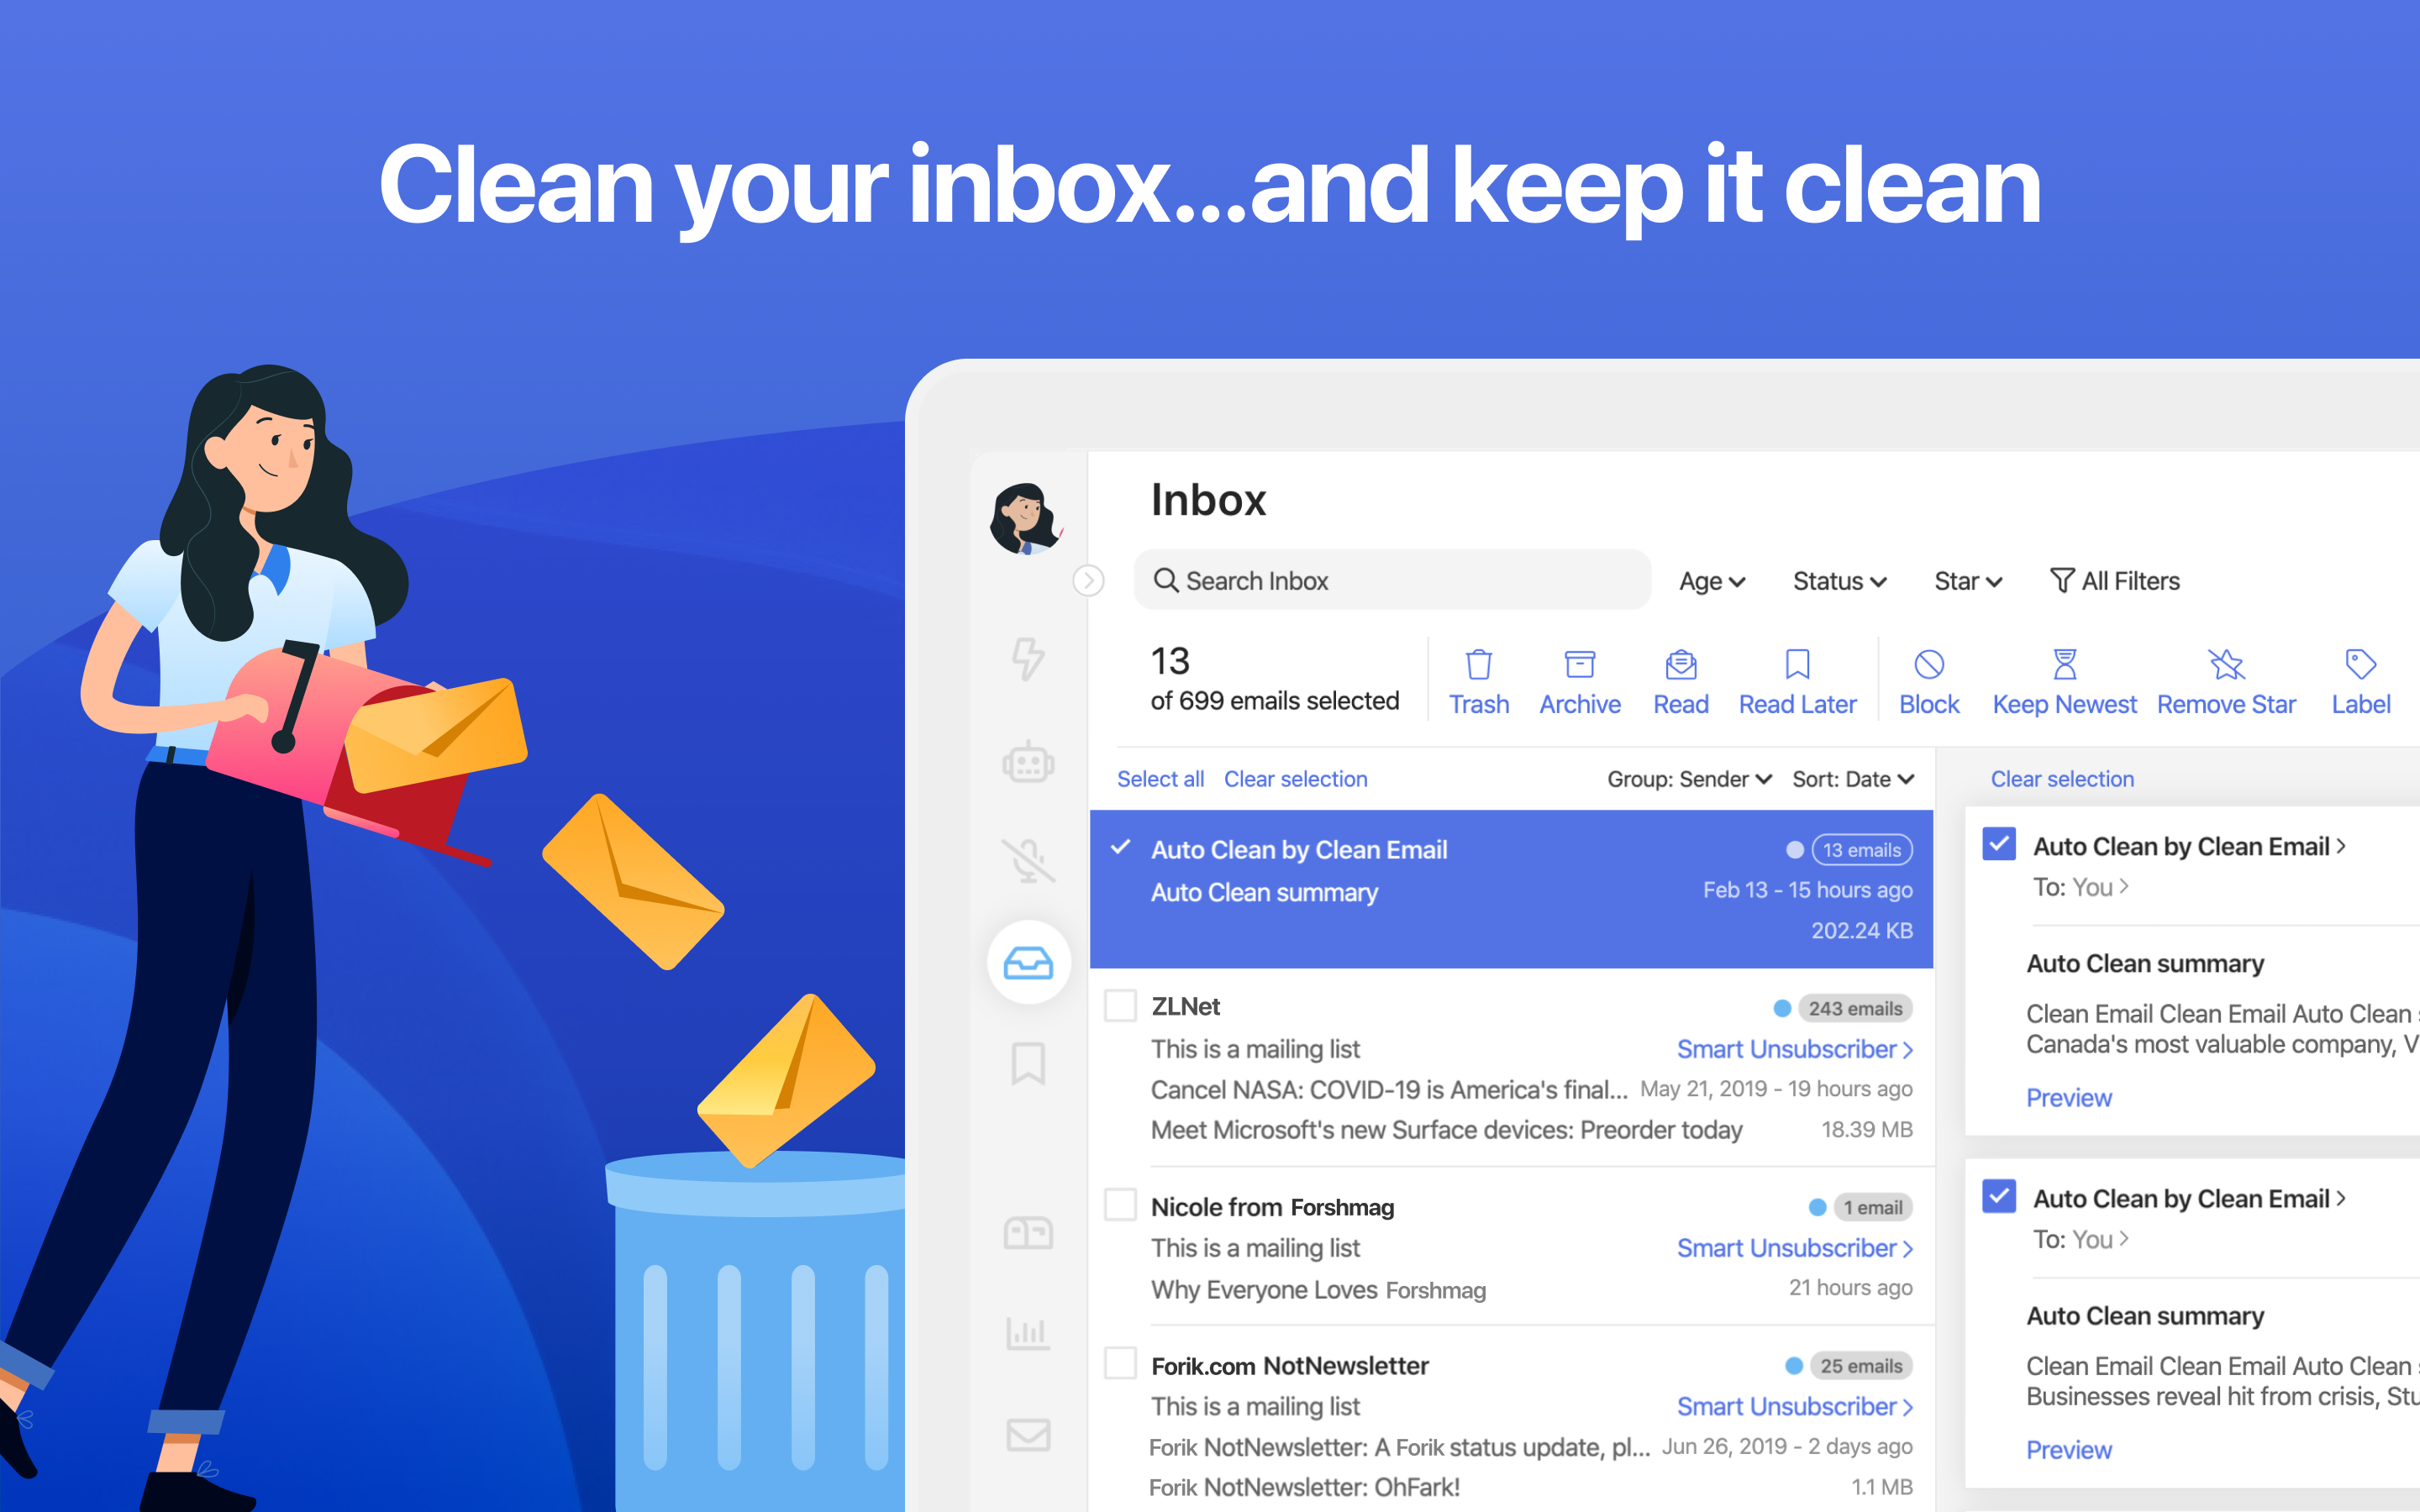 Clean Email screenshot & Video